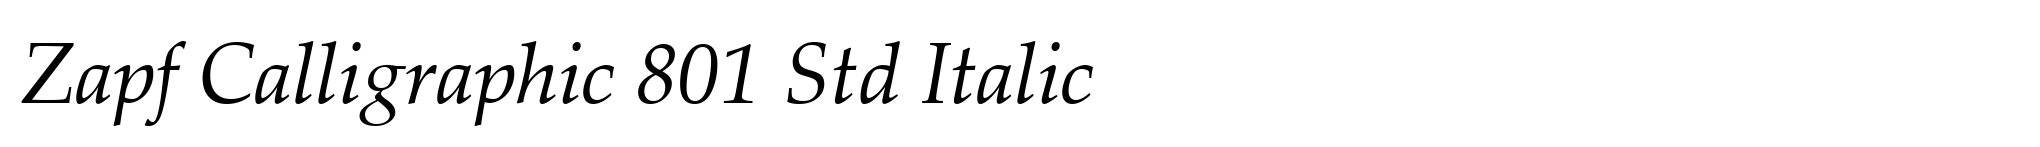 Zapf Calligraphic 801 Std Italic image